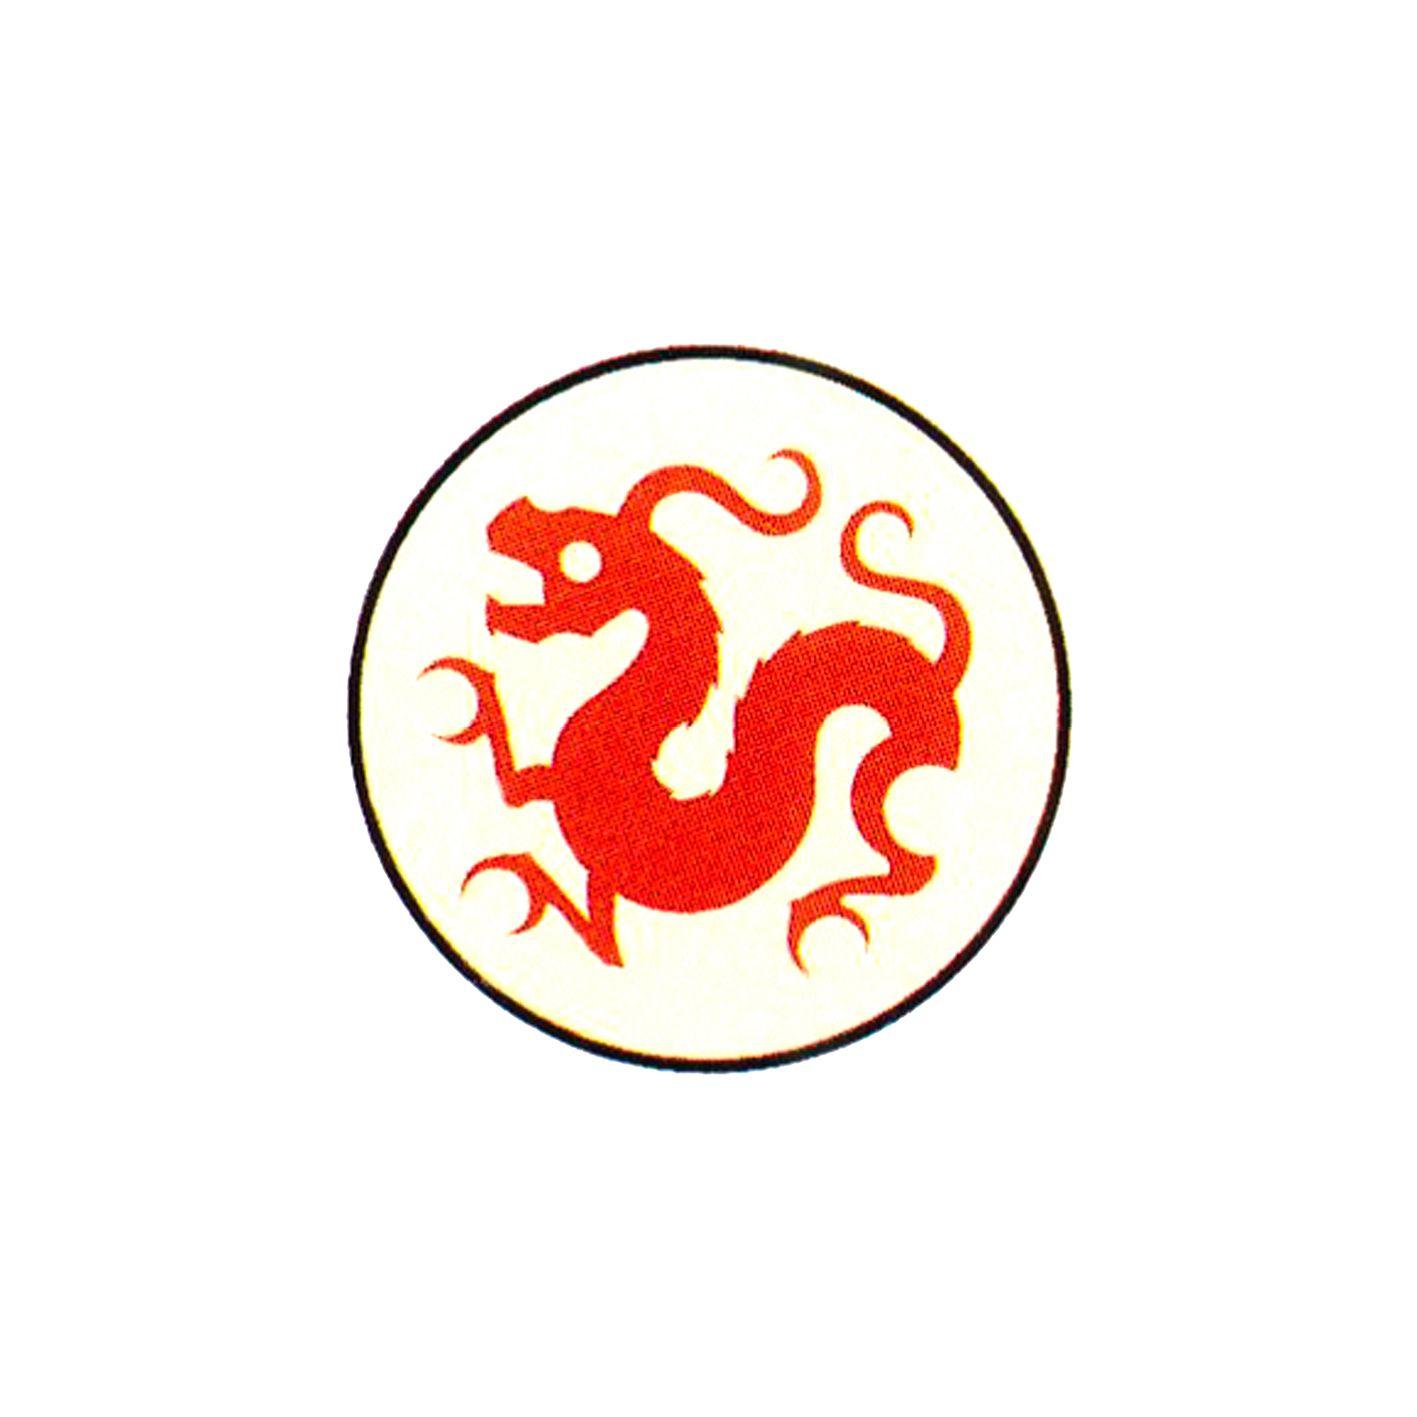 Chinese Phone Company Logo - China Bowl Trading Company Logo - Graphis